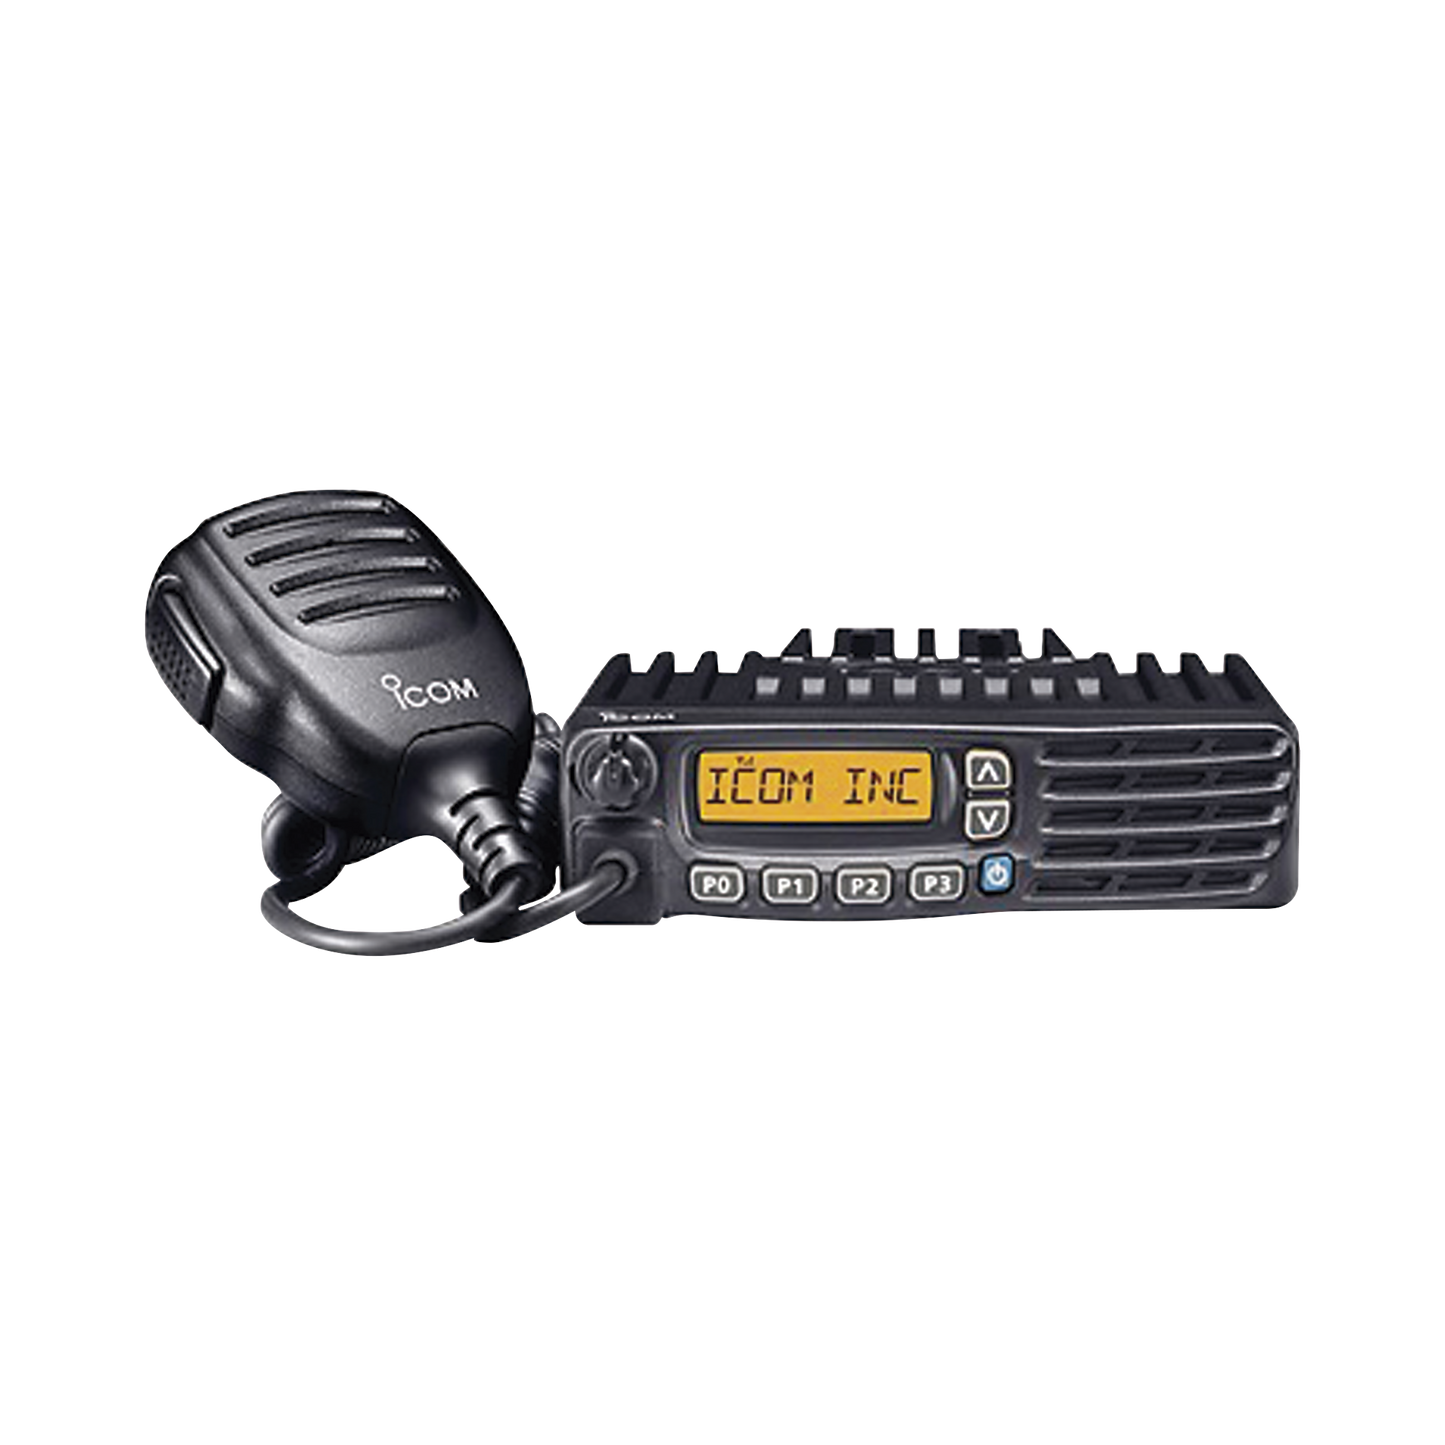 Digital Mobile Radio NXDN, 45 W, 400-470MHz, 128 Channels, Analog, Digital, Mixed, Trunking, Multitrunk